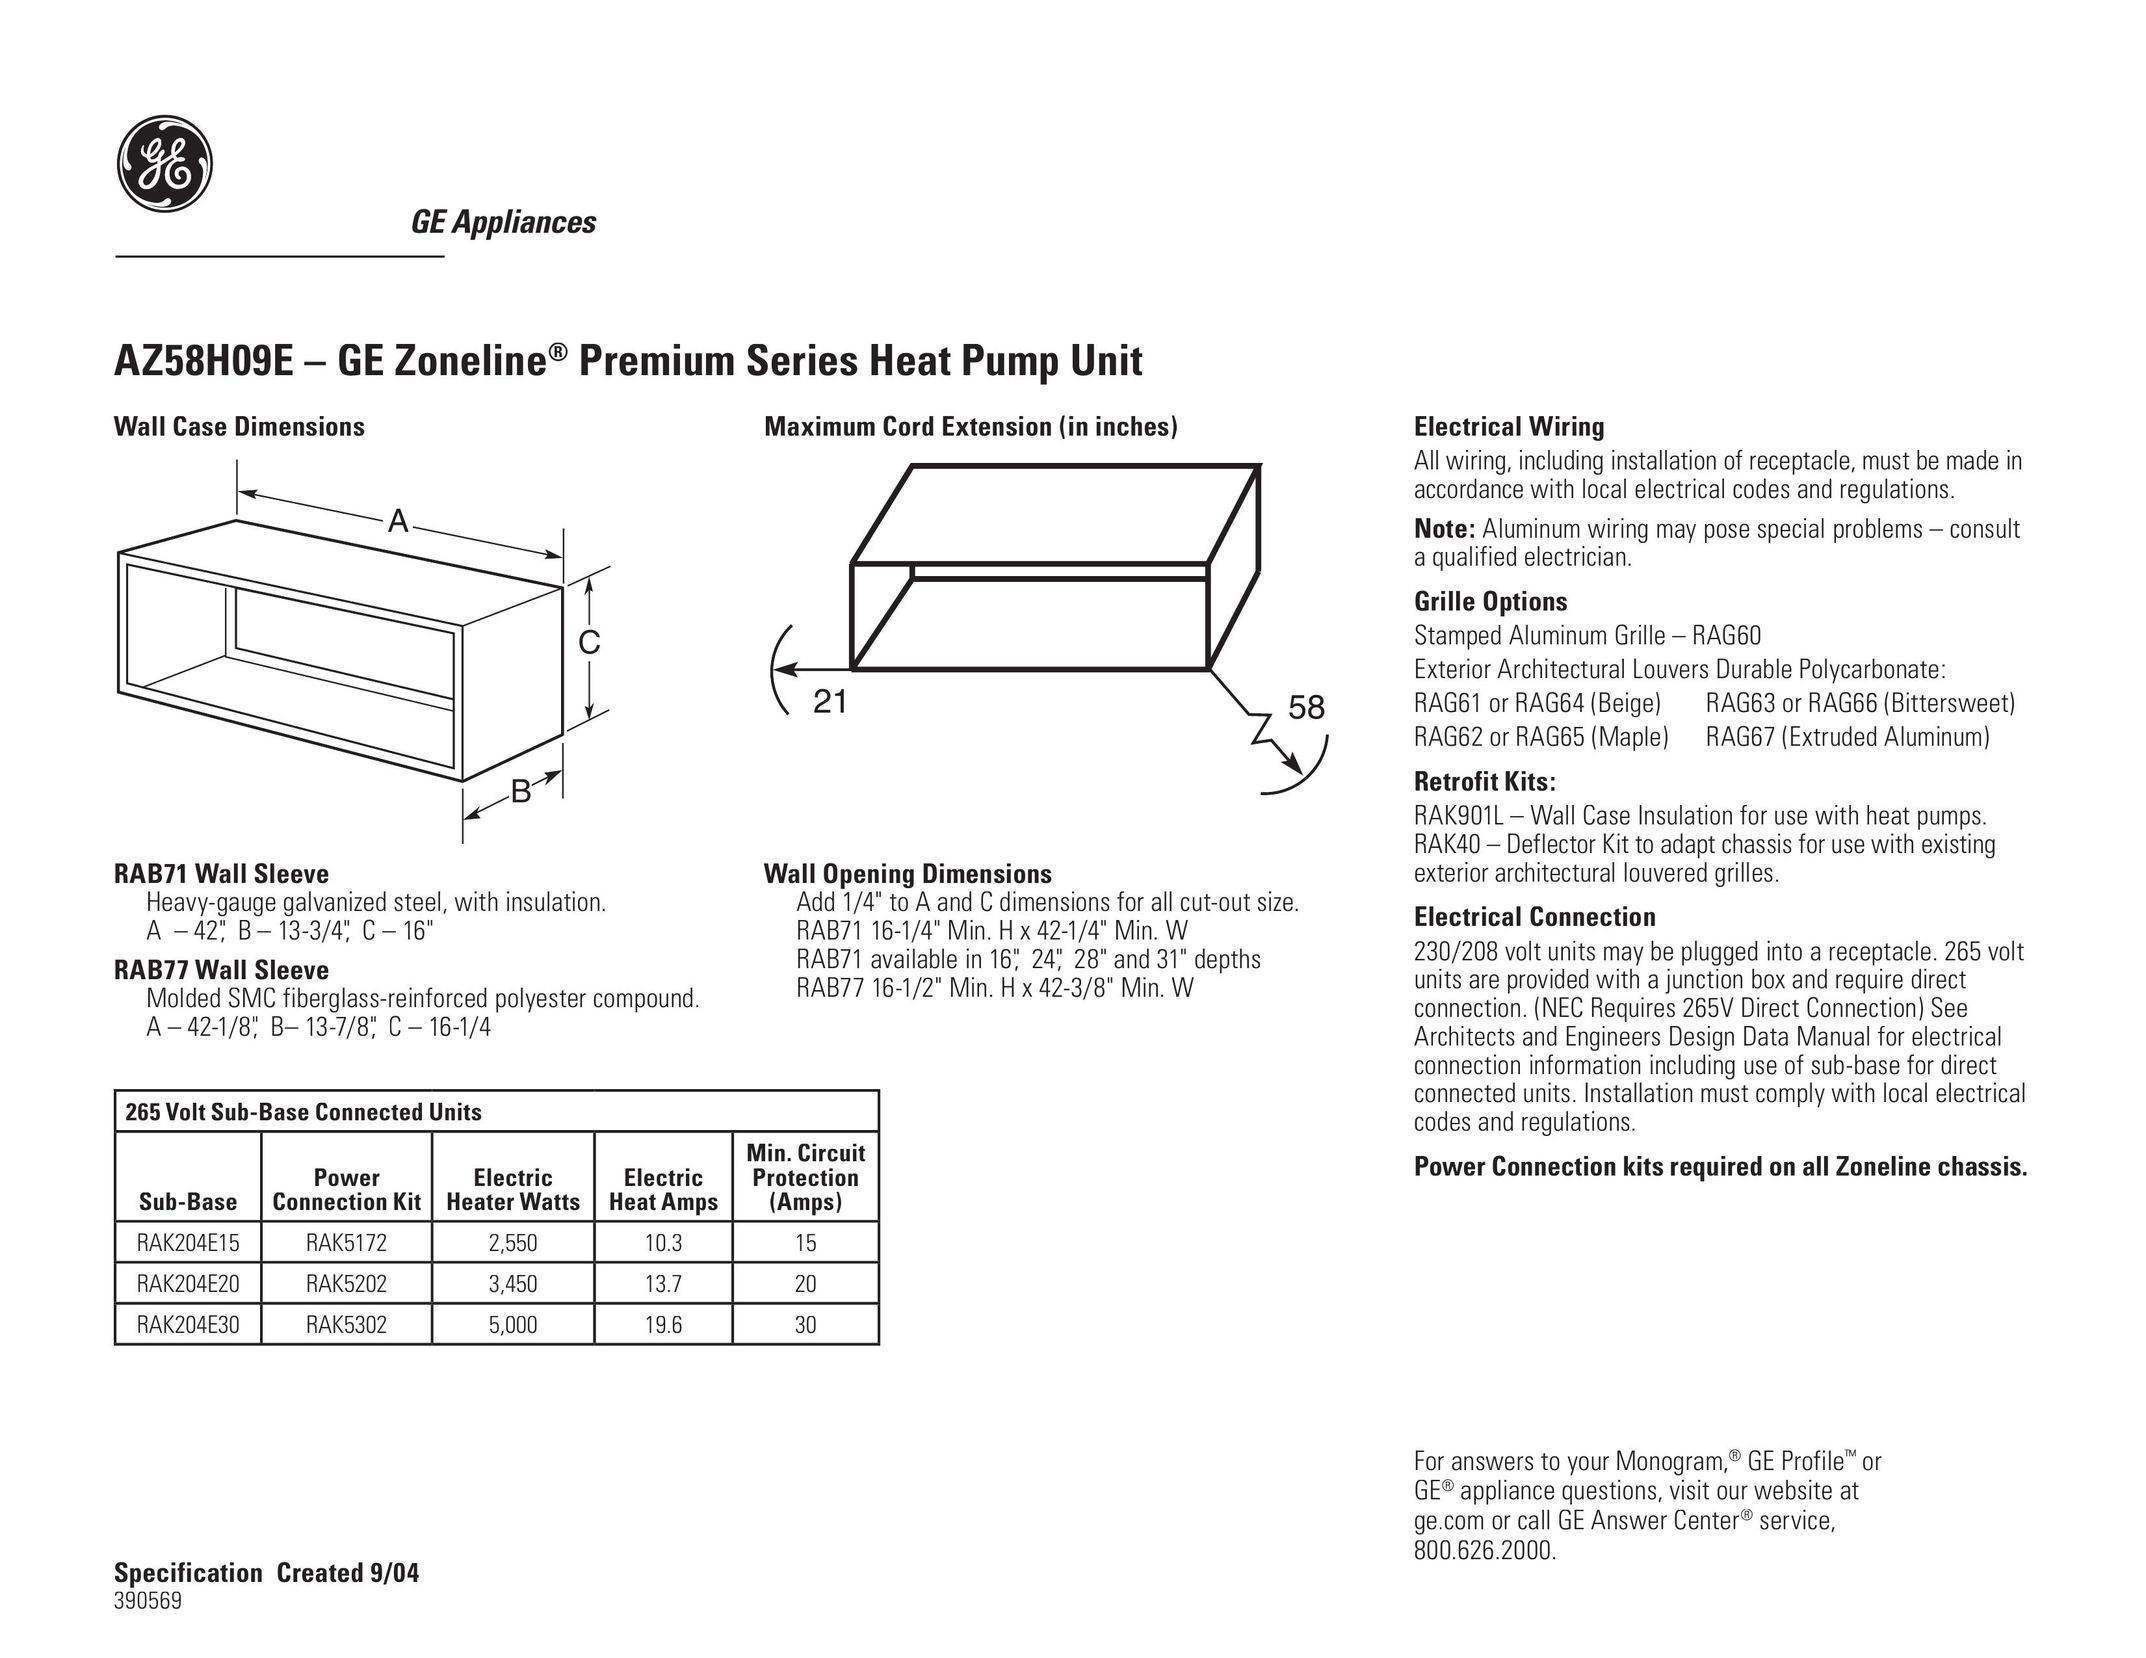 GE AZ58H09EAD Heat Pump User Manual